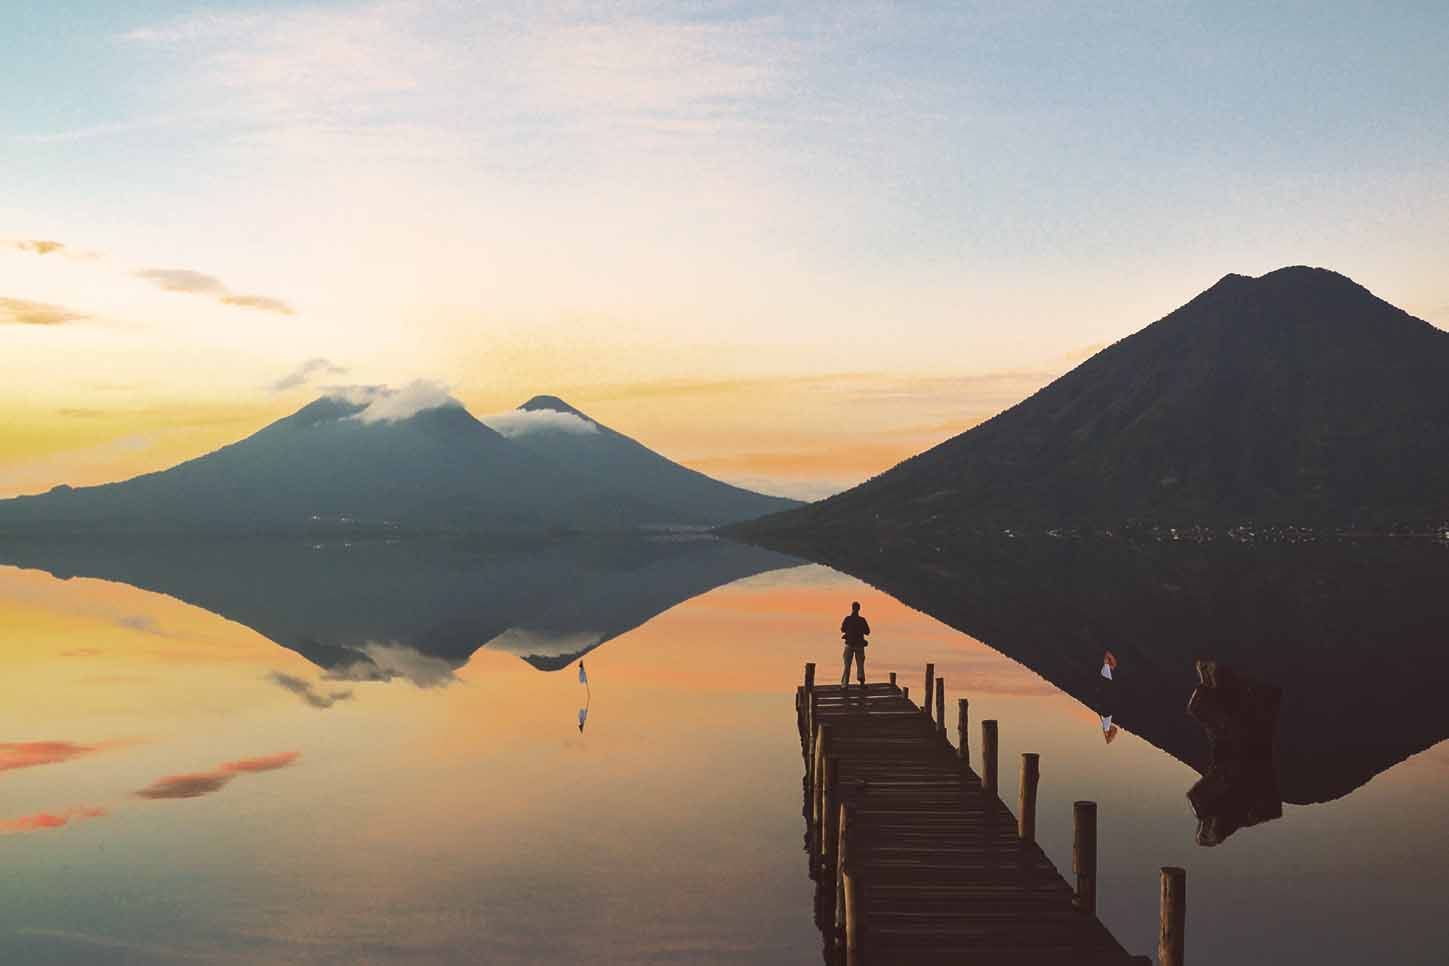 Guatemala: Man rowing on a lake at sundown with volcano backdrop